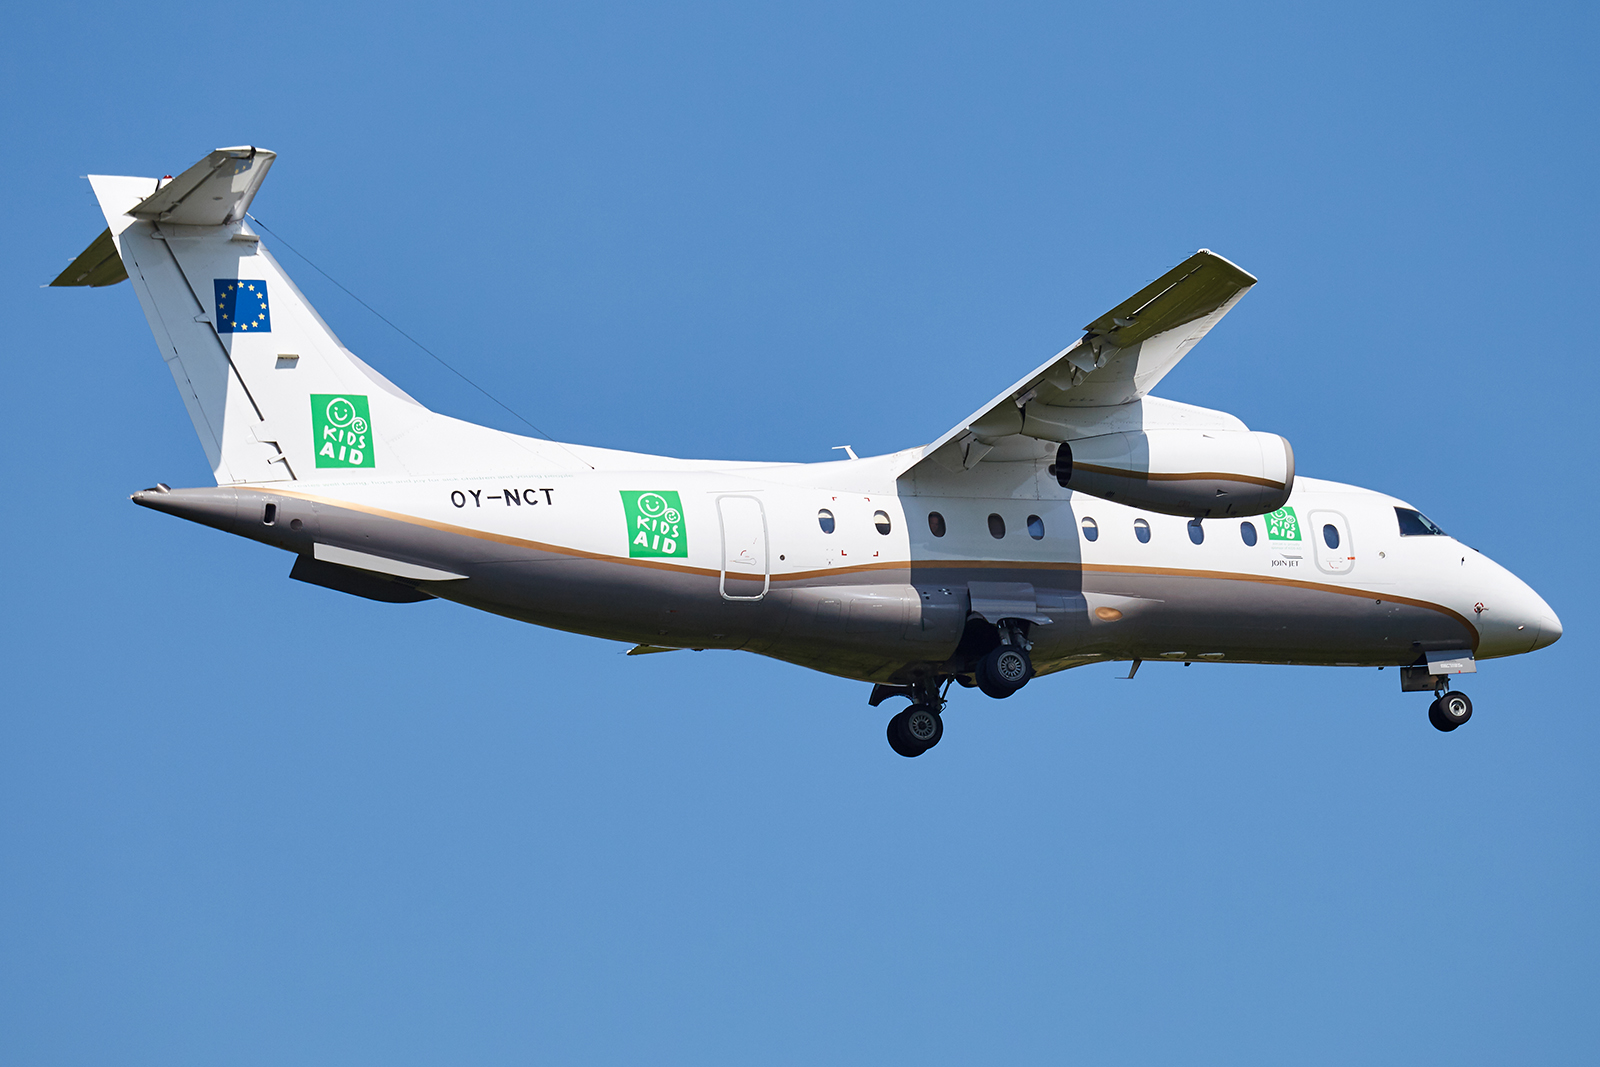 [24/05/20196] Dornier Do-328 Jet (OY-NCT) Sun-Air of Scandinavia "Kids Aid" Livery 1905240958215493216250019